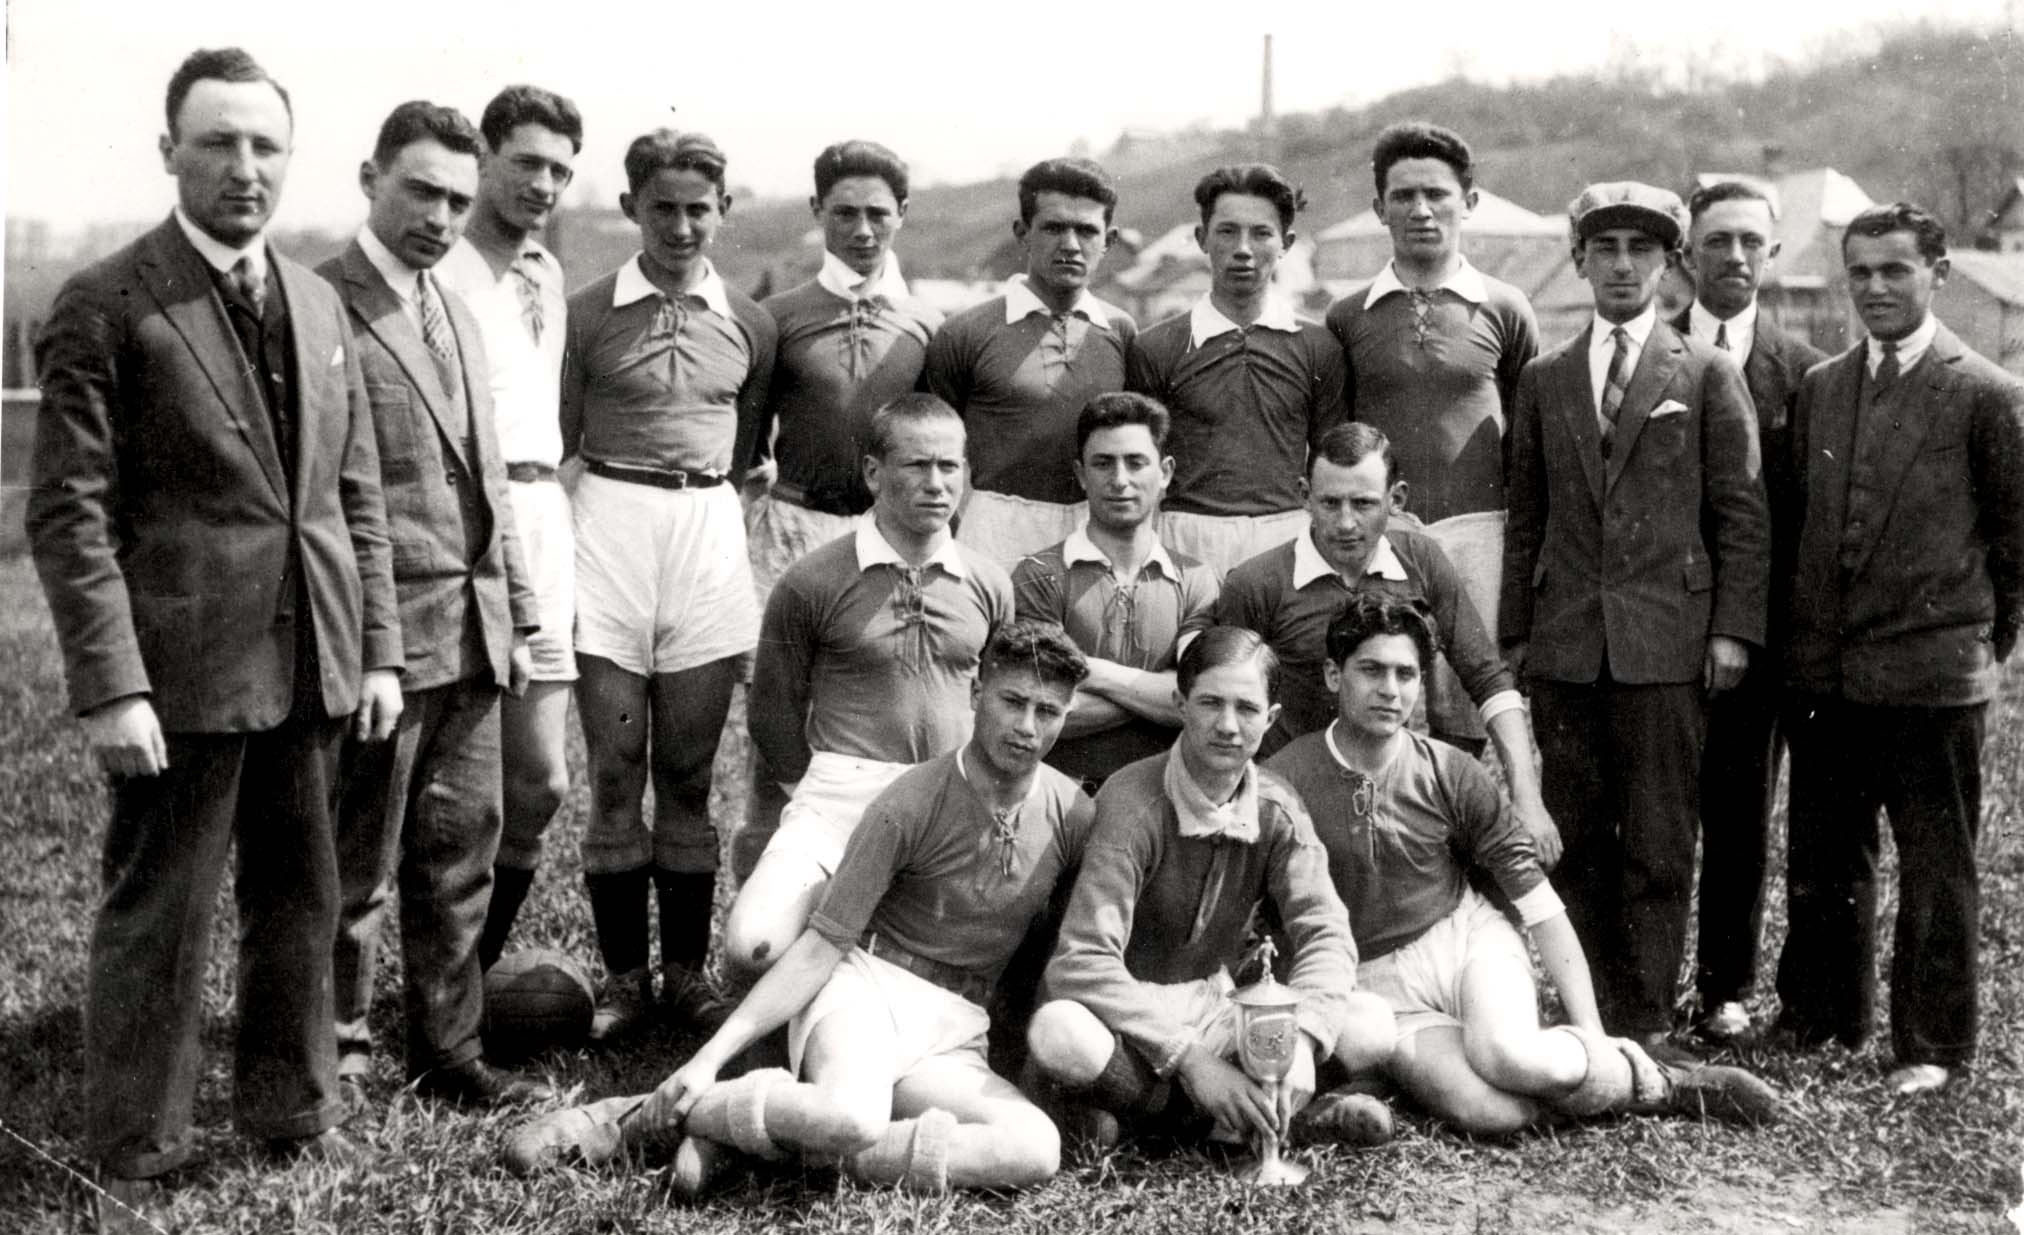 Kowno, Lithuania, 1936, The "Maccabi" football team